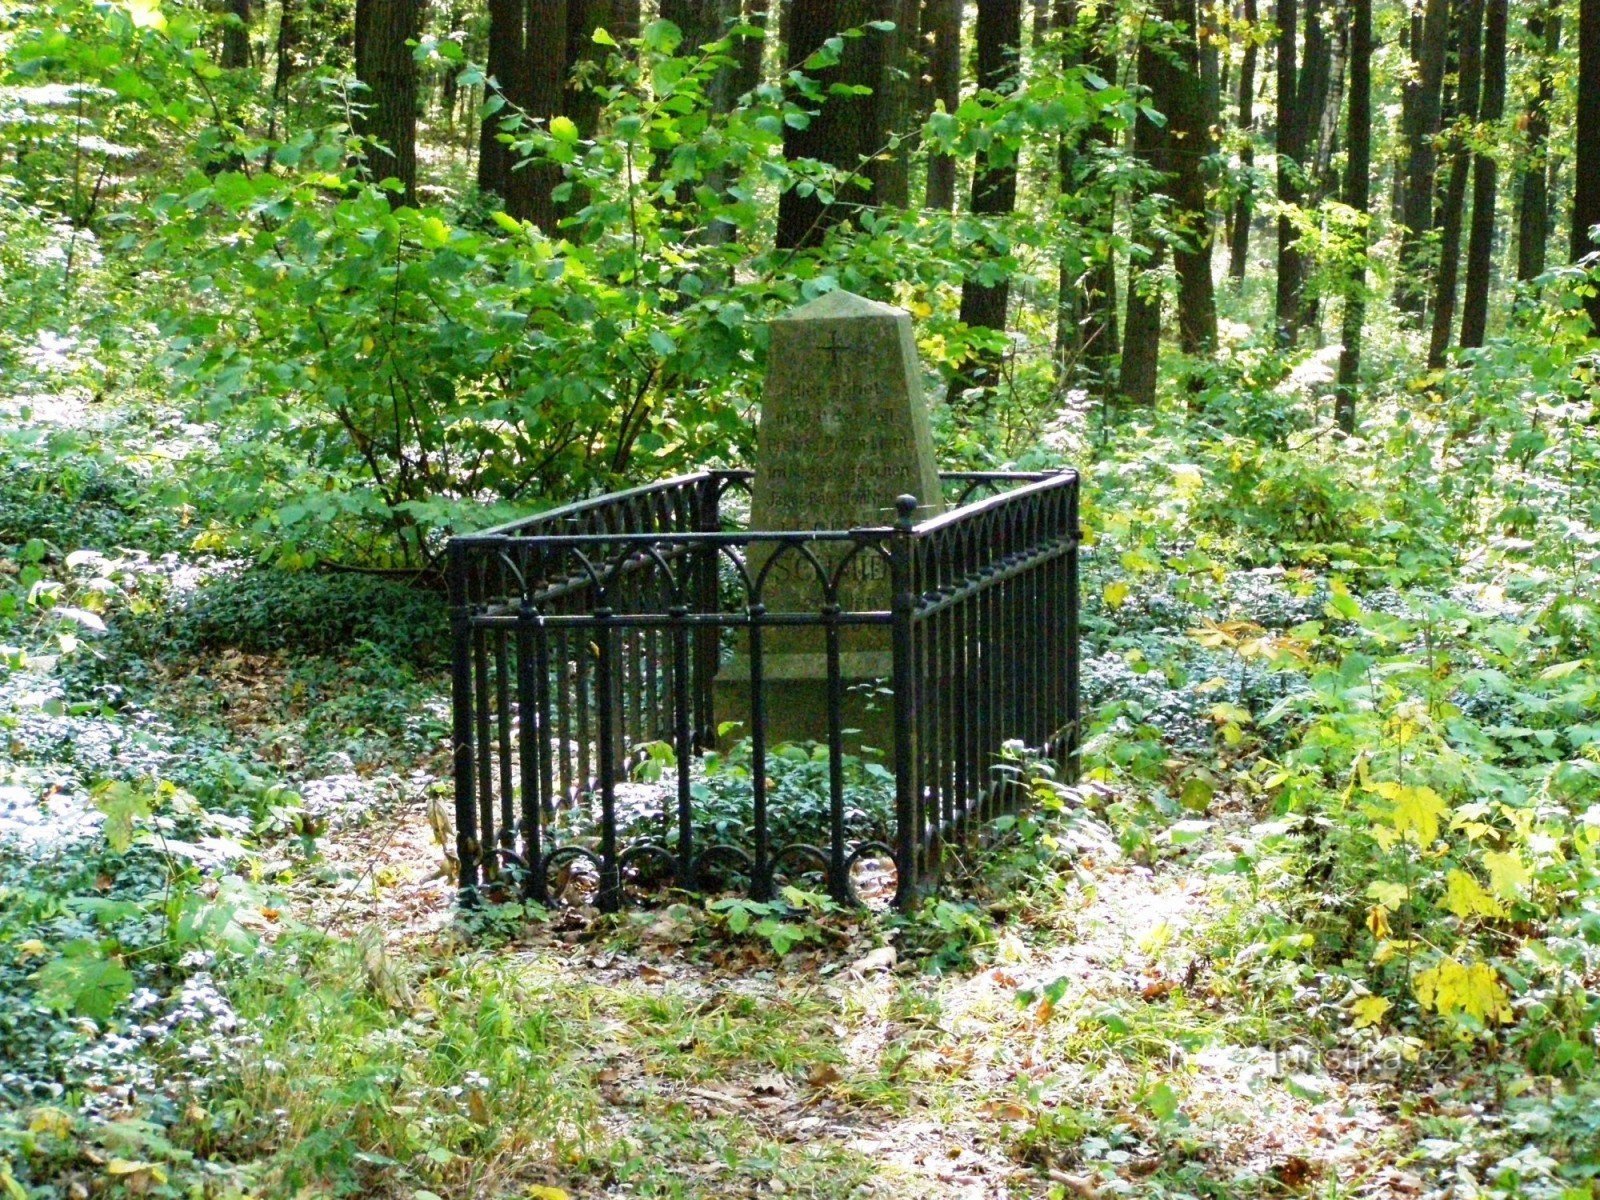 Les Svíb - Σοκάκι των νεκρών, μνημείο του Leopold Schmidt